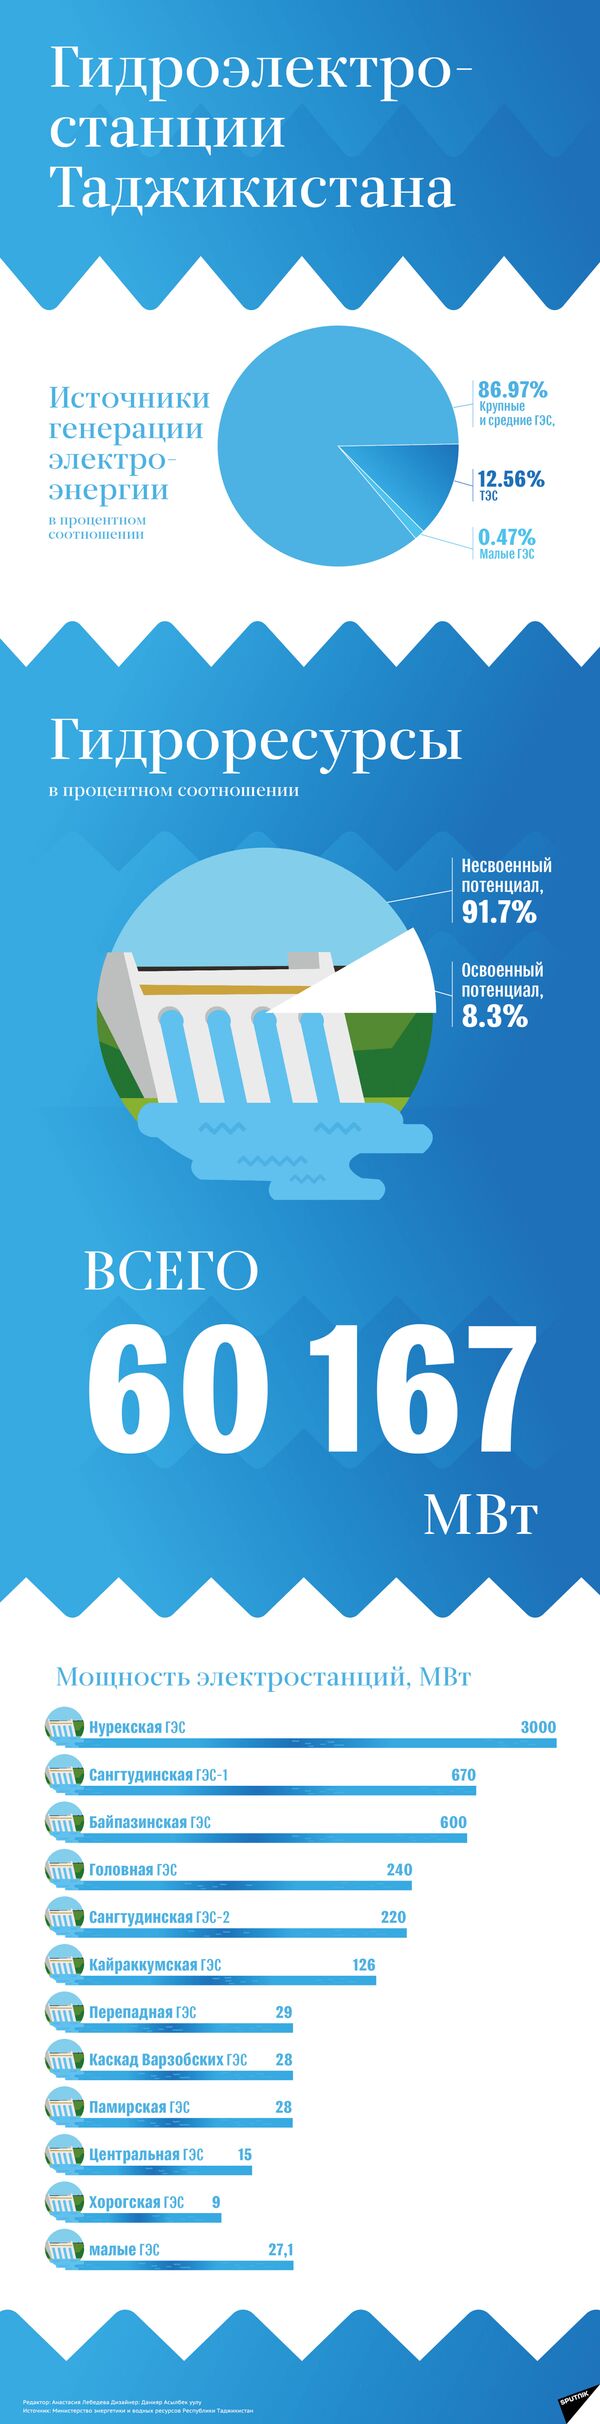 Инфографика гидроэлектростанции Таджикистана - Sputnik Таджикистан